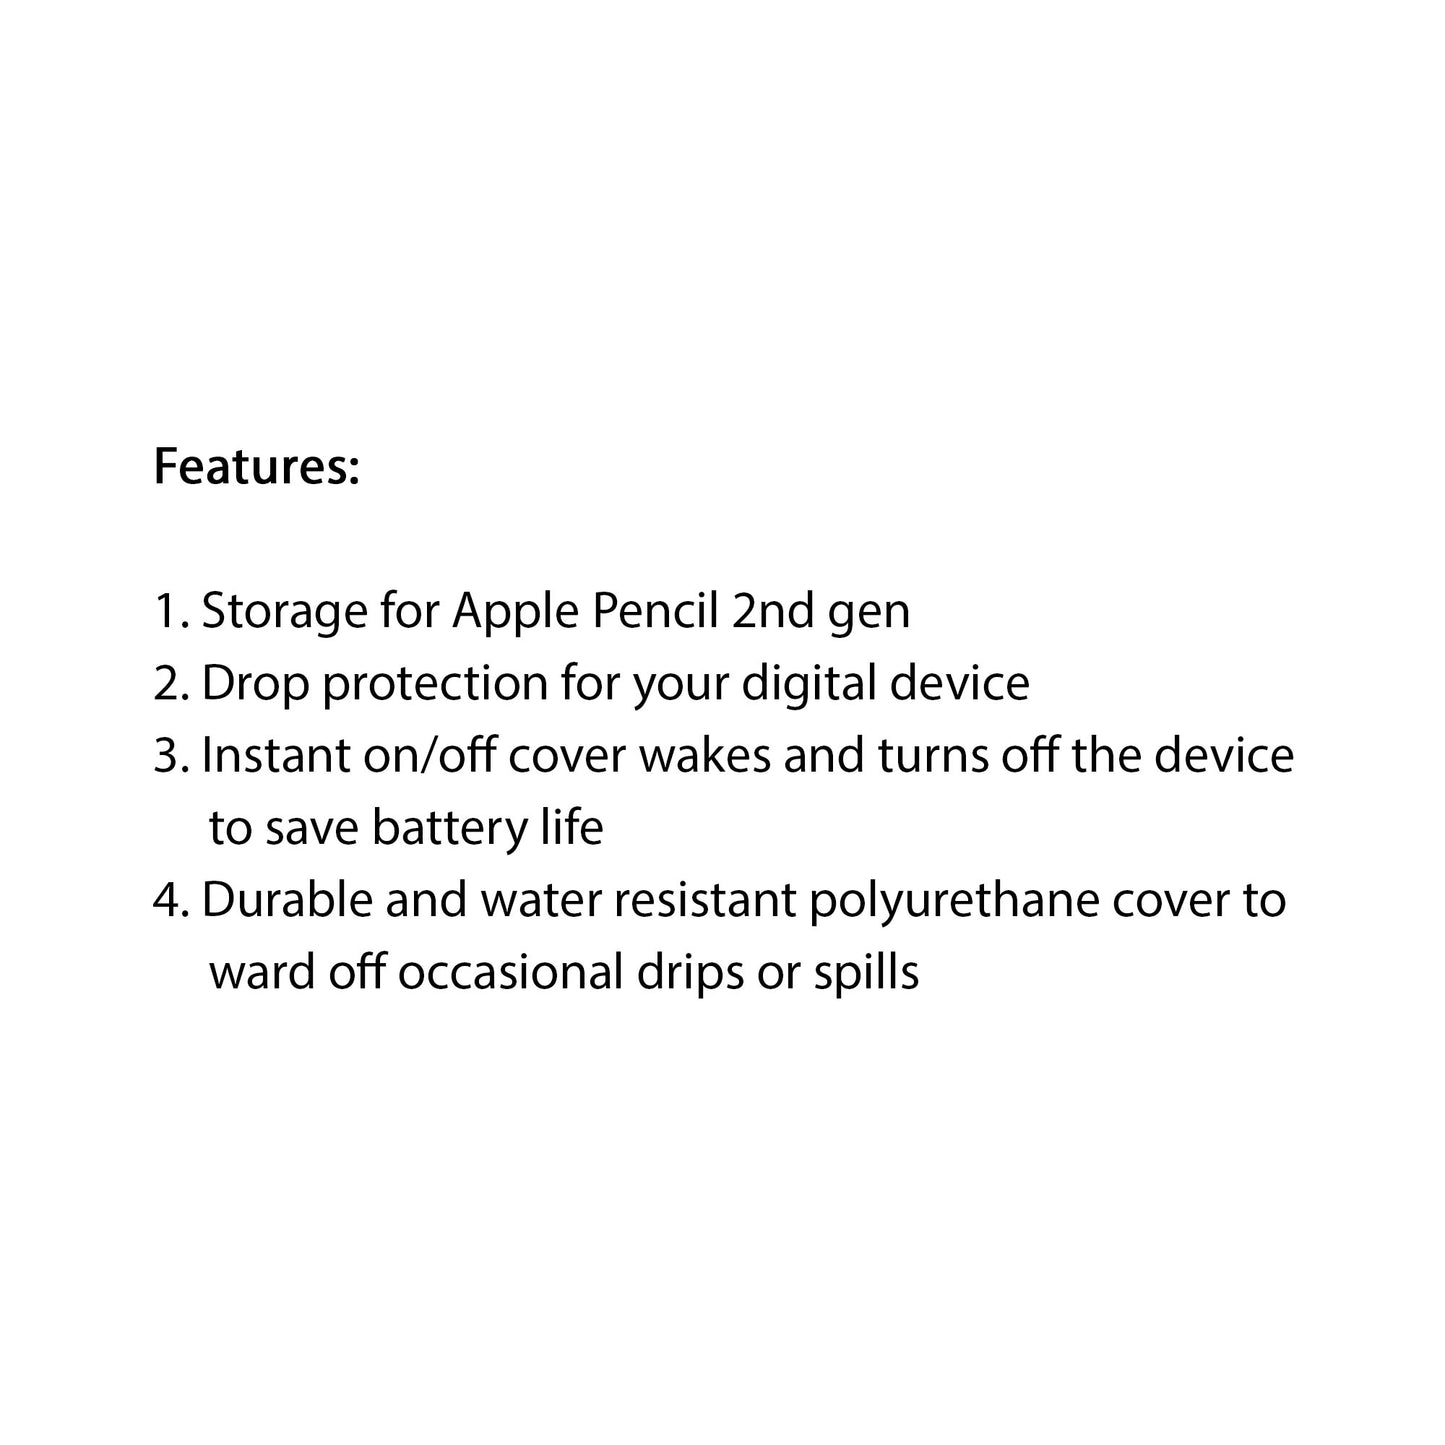 STM Dux Plus for iPad Mini 6 ( 2021 ) - Midnight Blue (Barcode: 810046112281 )